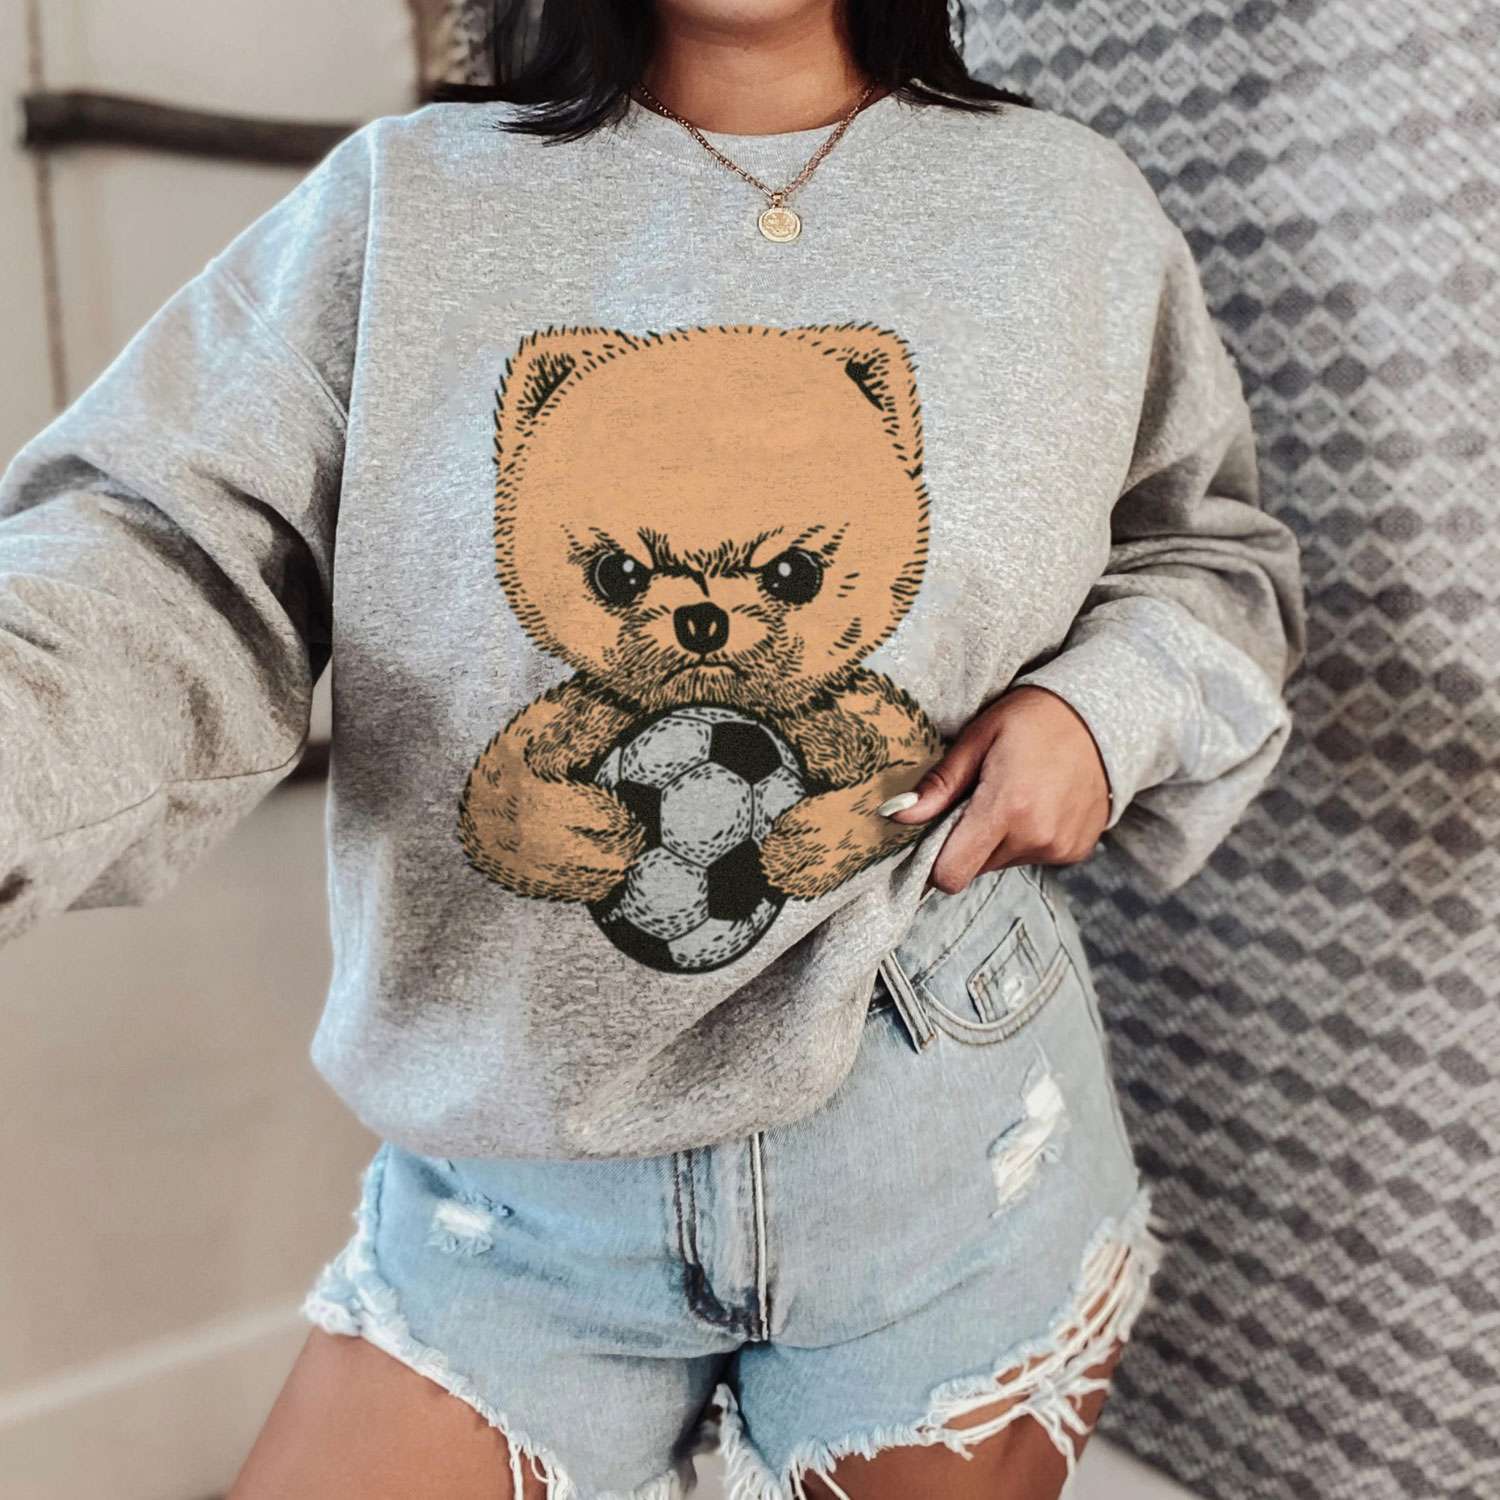 Angry Teddy Bear With Soccer Ball T-shirt